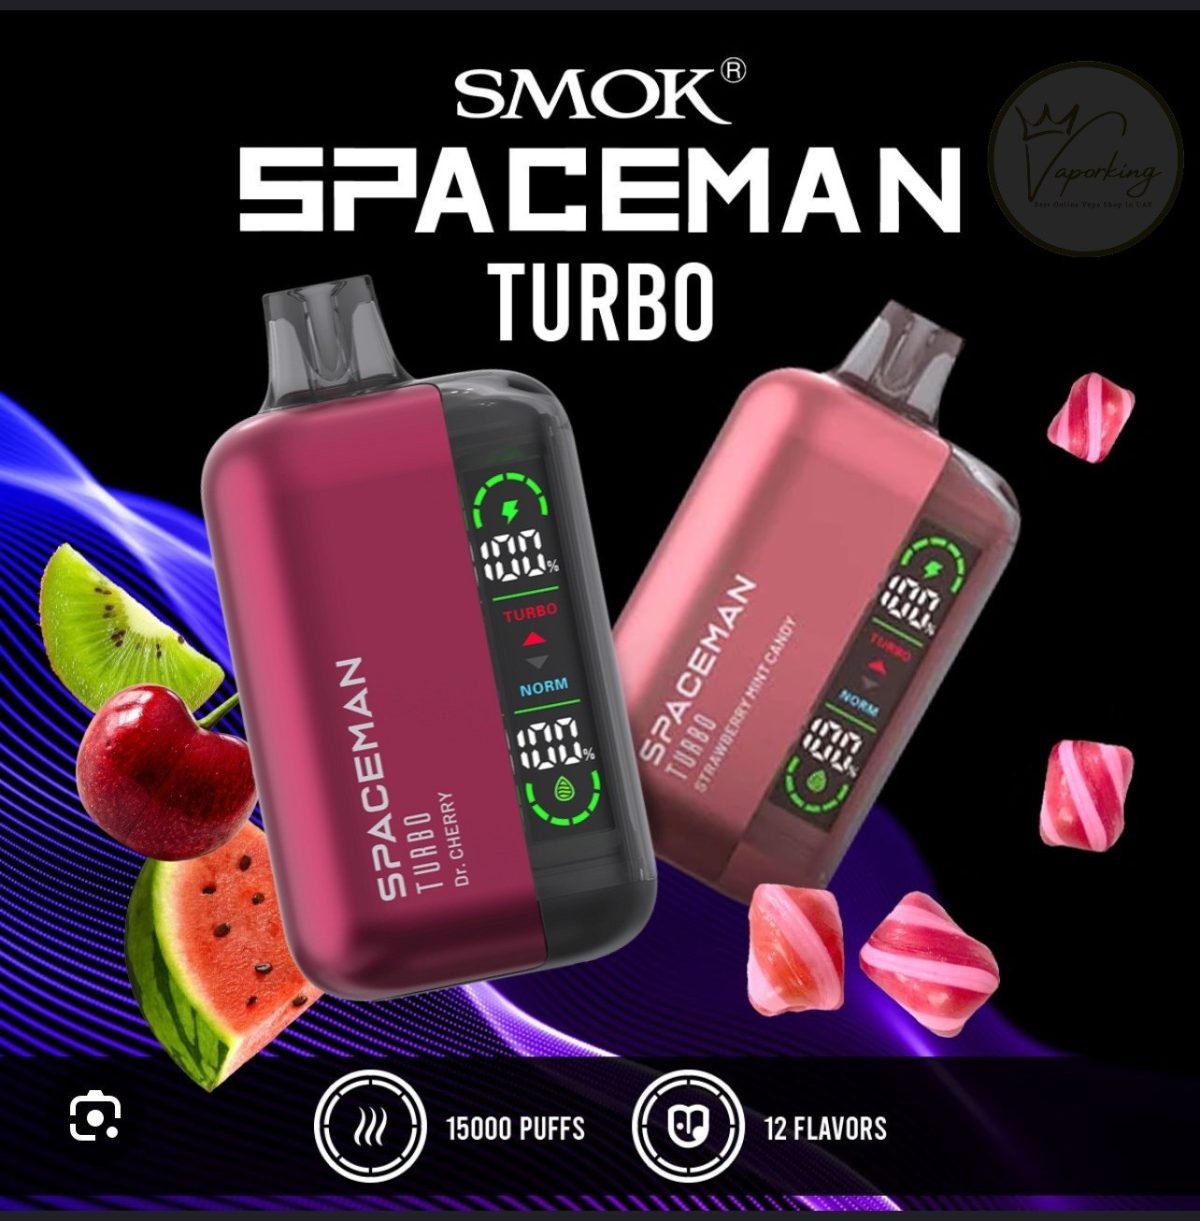 SMOK SPACEMAN Turbo 15000 Puffs